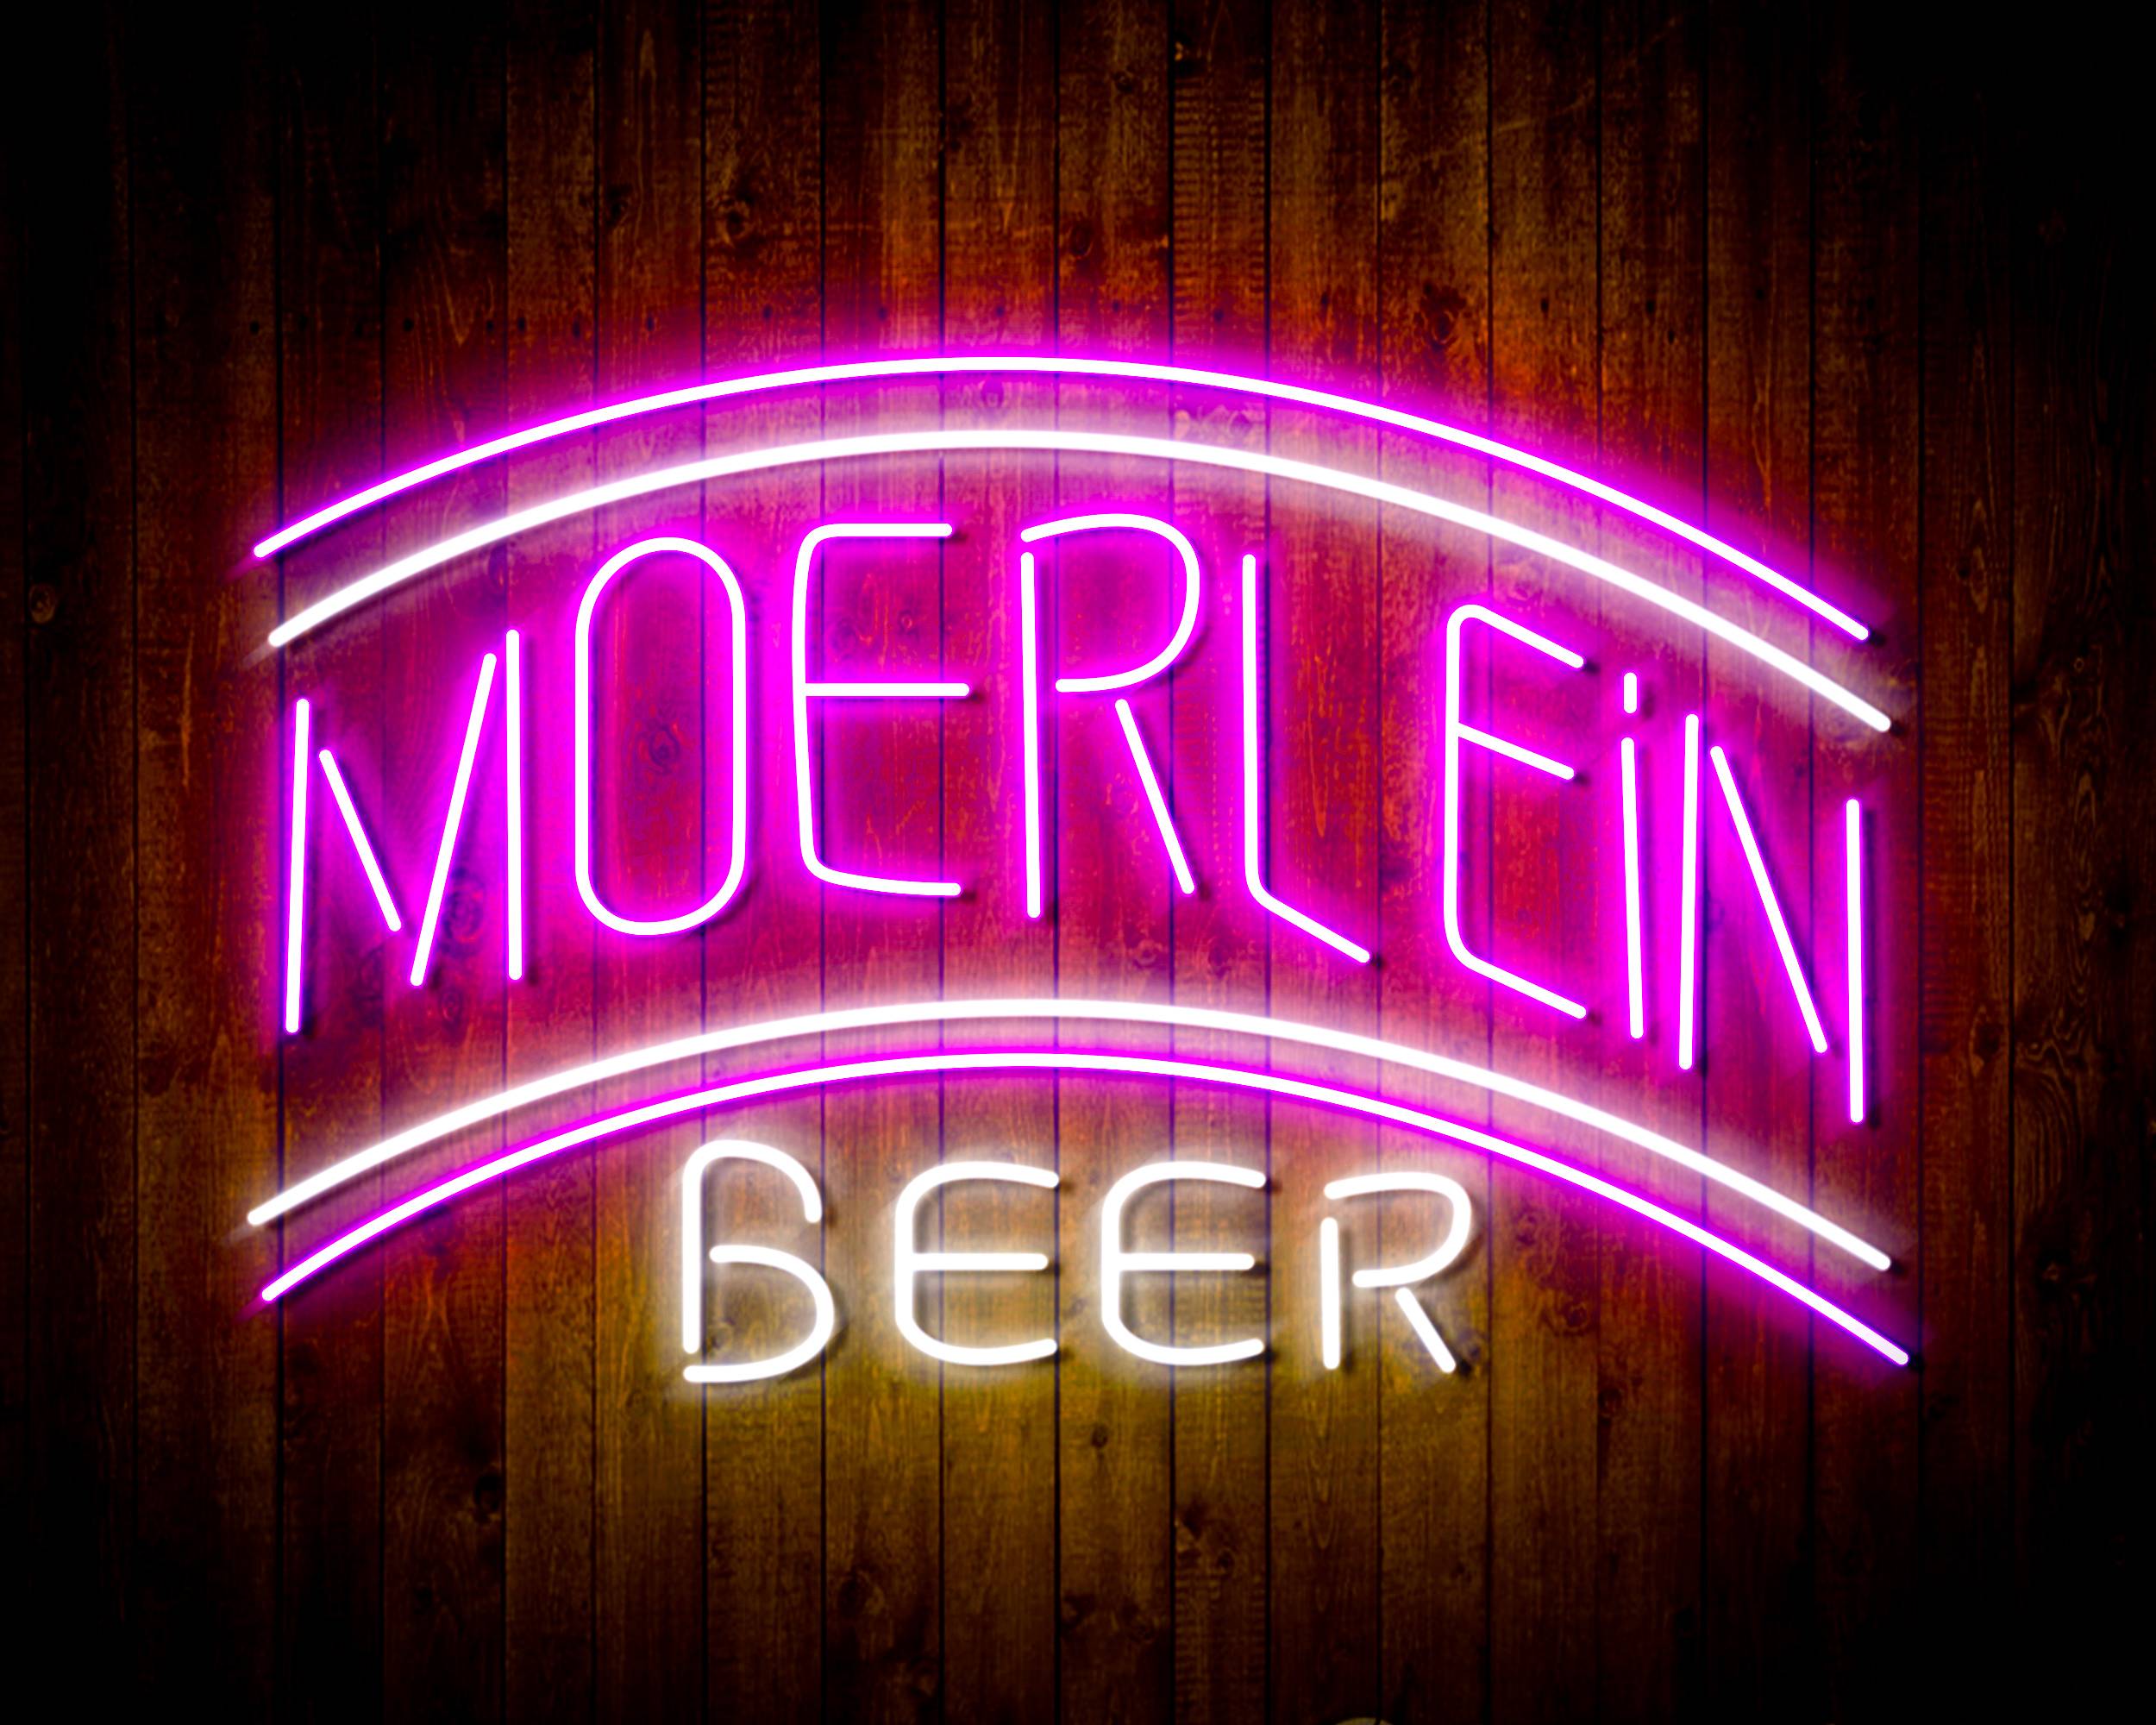 Moerlein Beer Handmade Neon Flex LED Sign